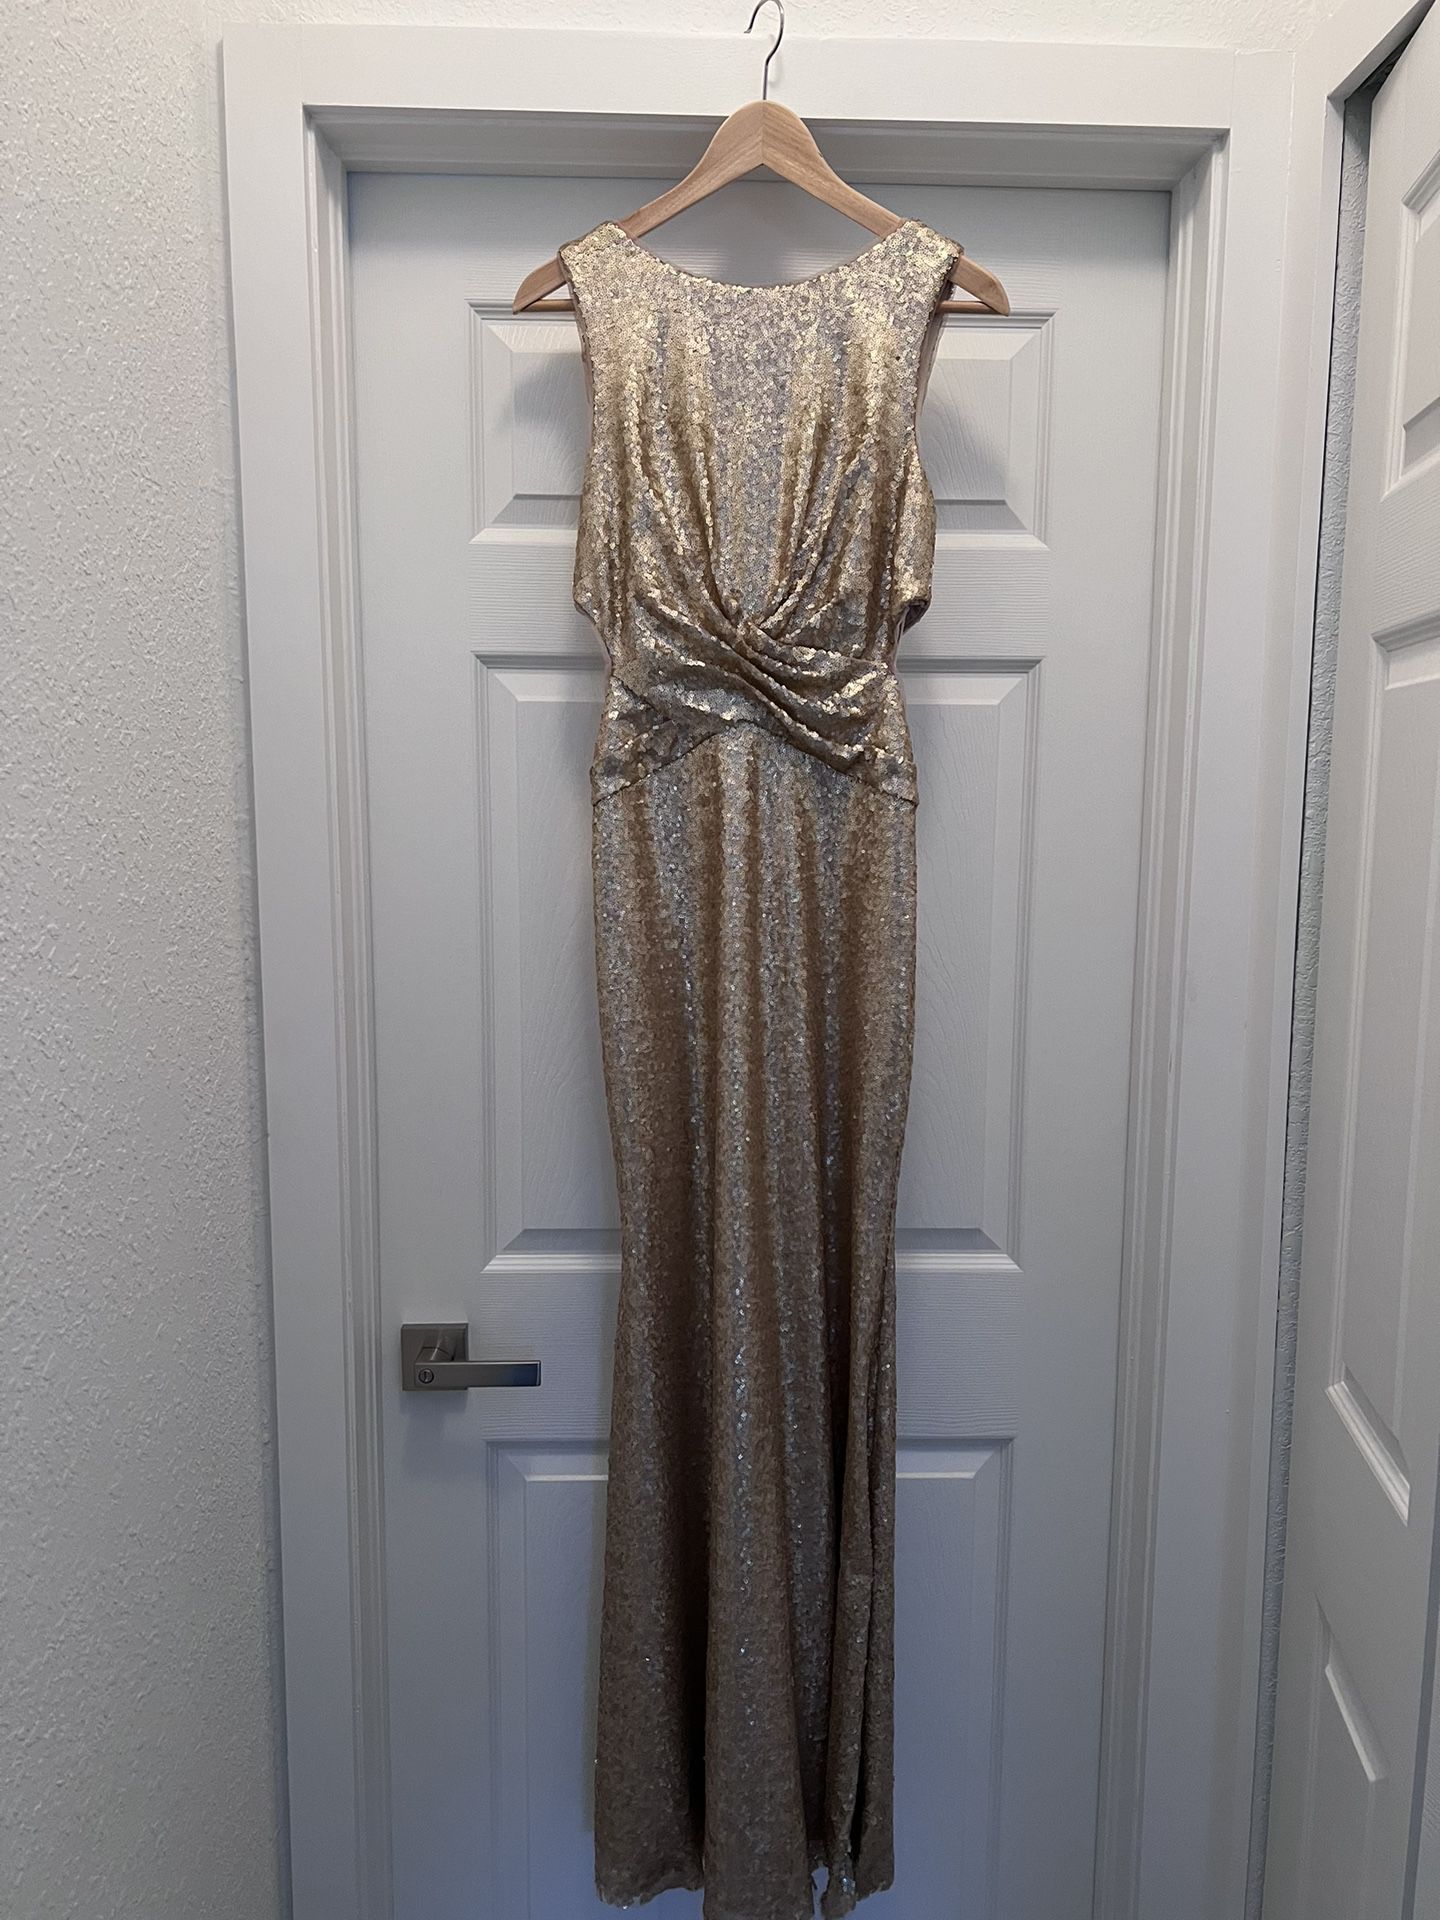 Gold Evening Gown / Vestido Dorado De Noche 